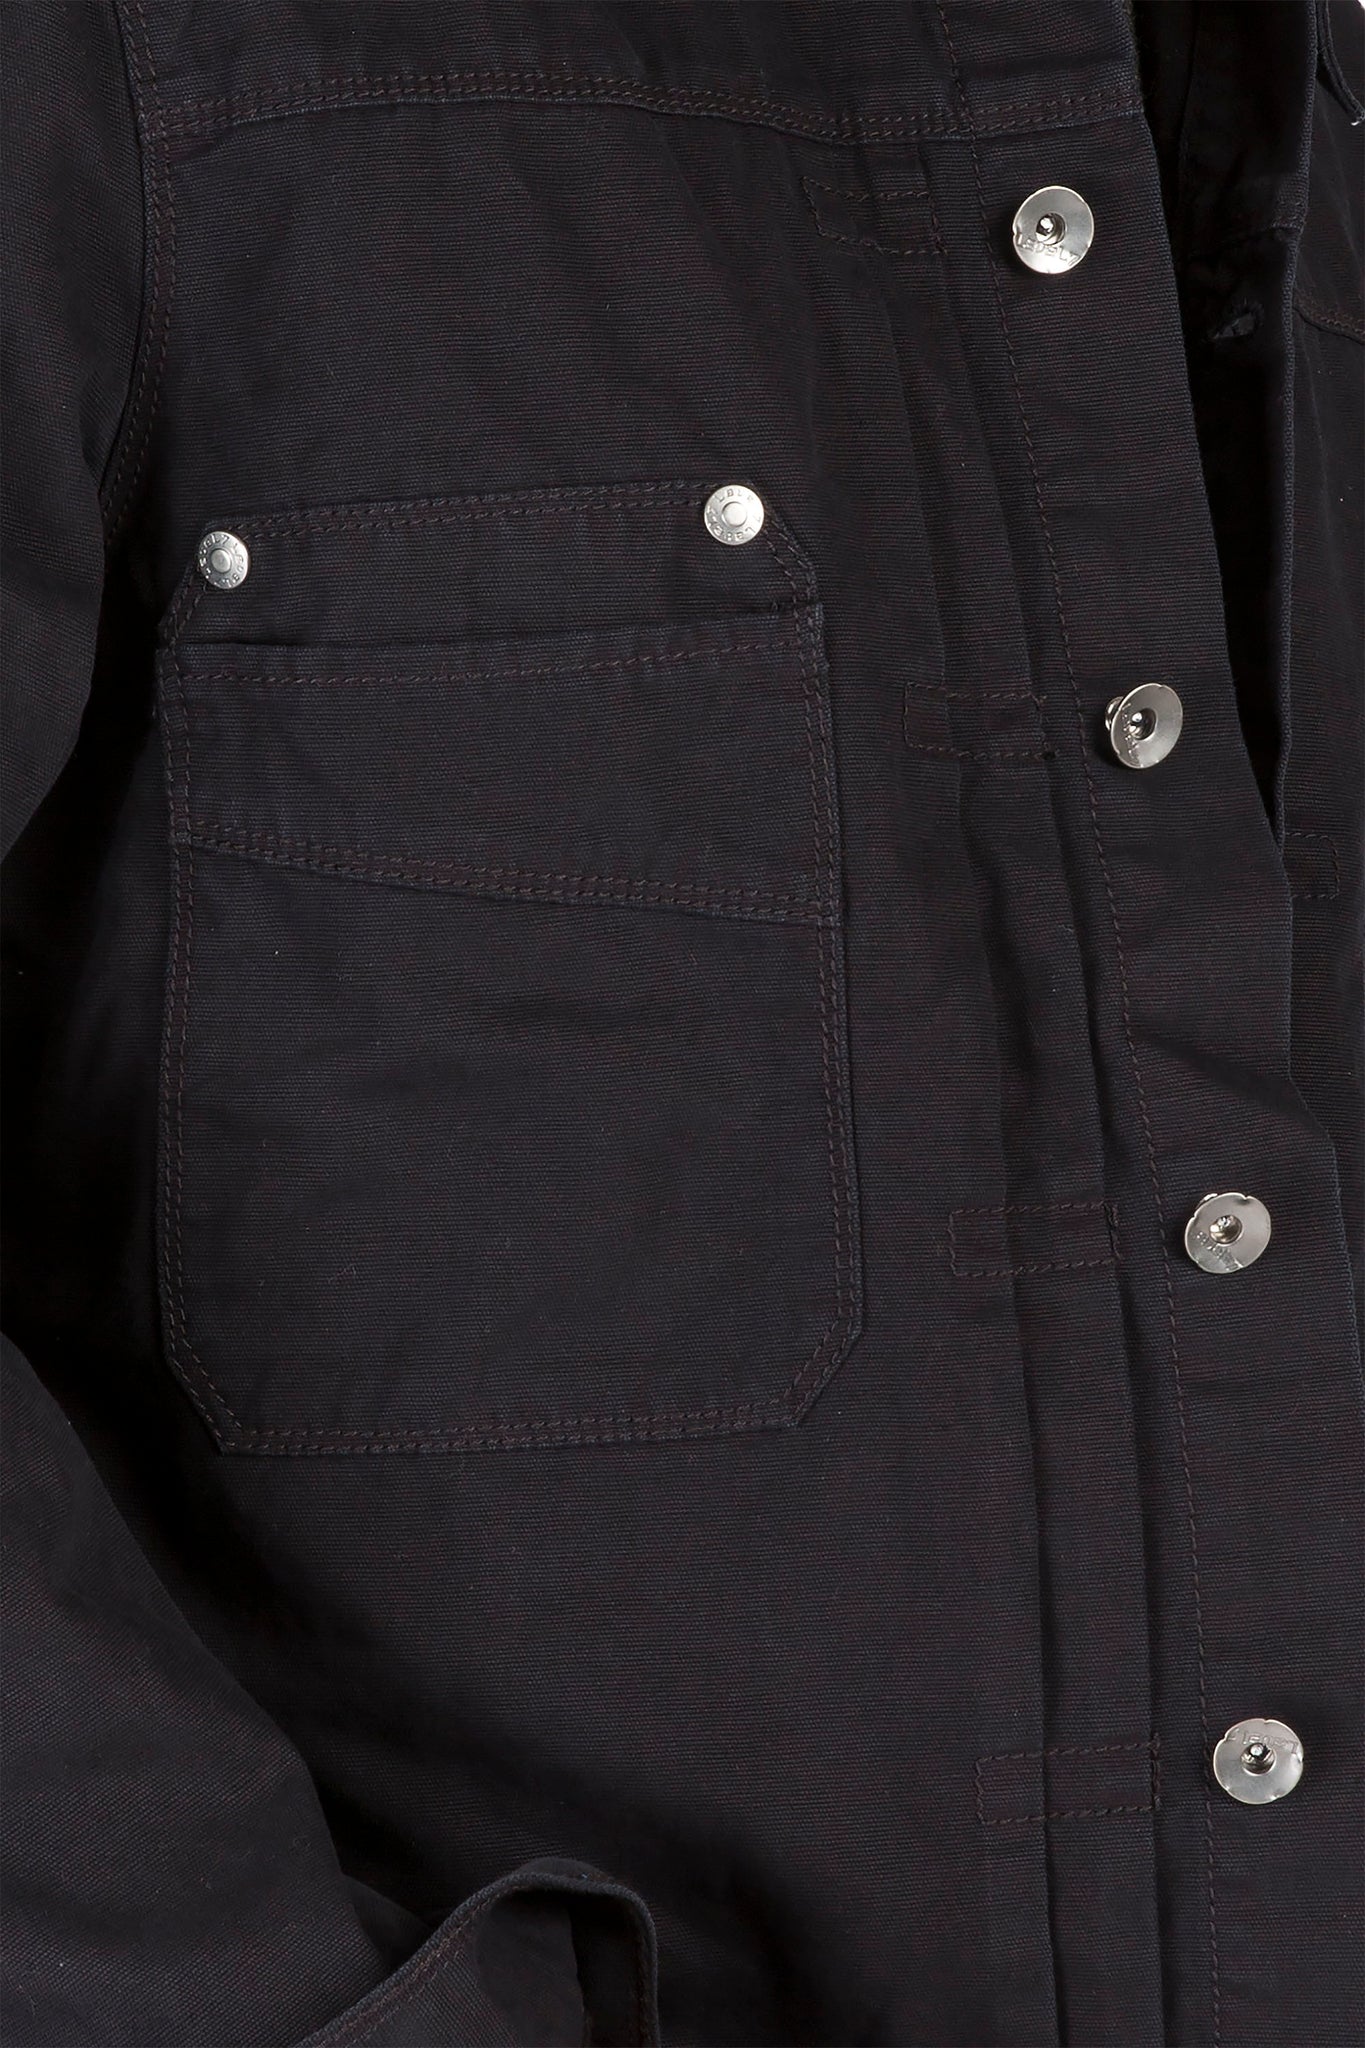 Black Heavy Canvas Trucker Jacket 100% Cotton Rugged & Stylish